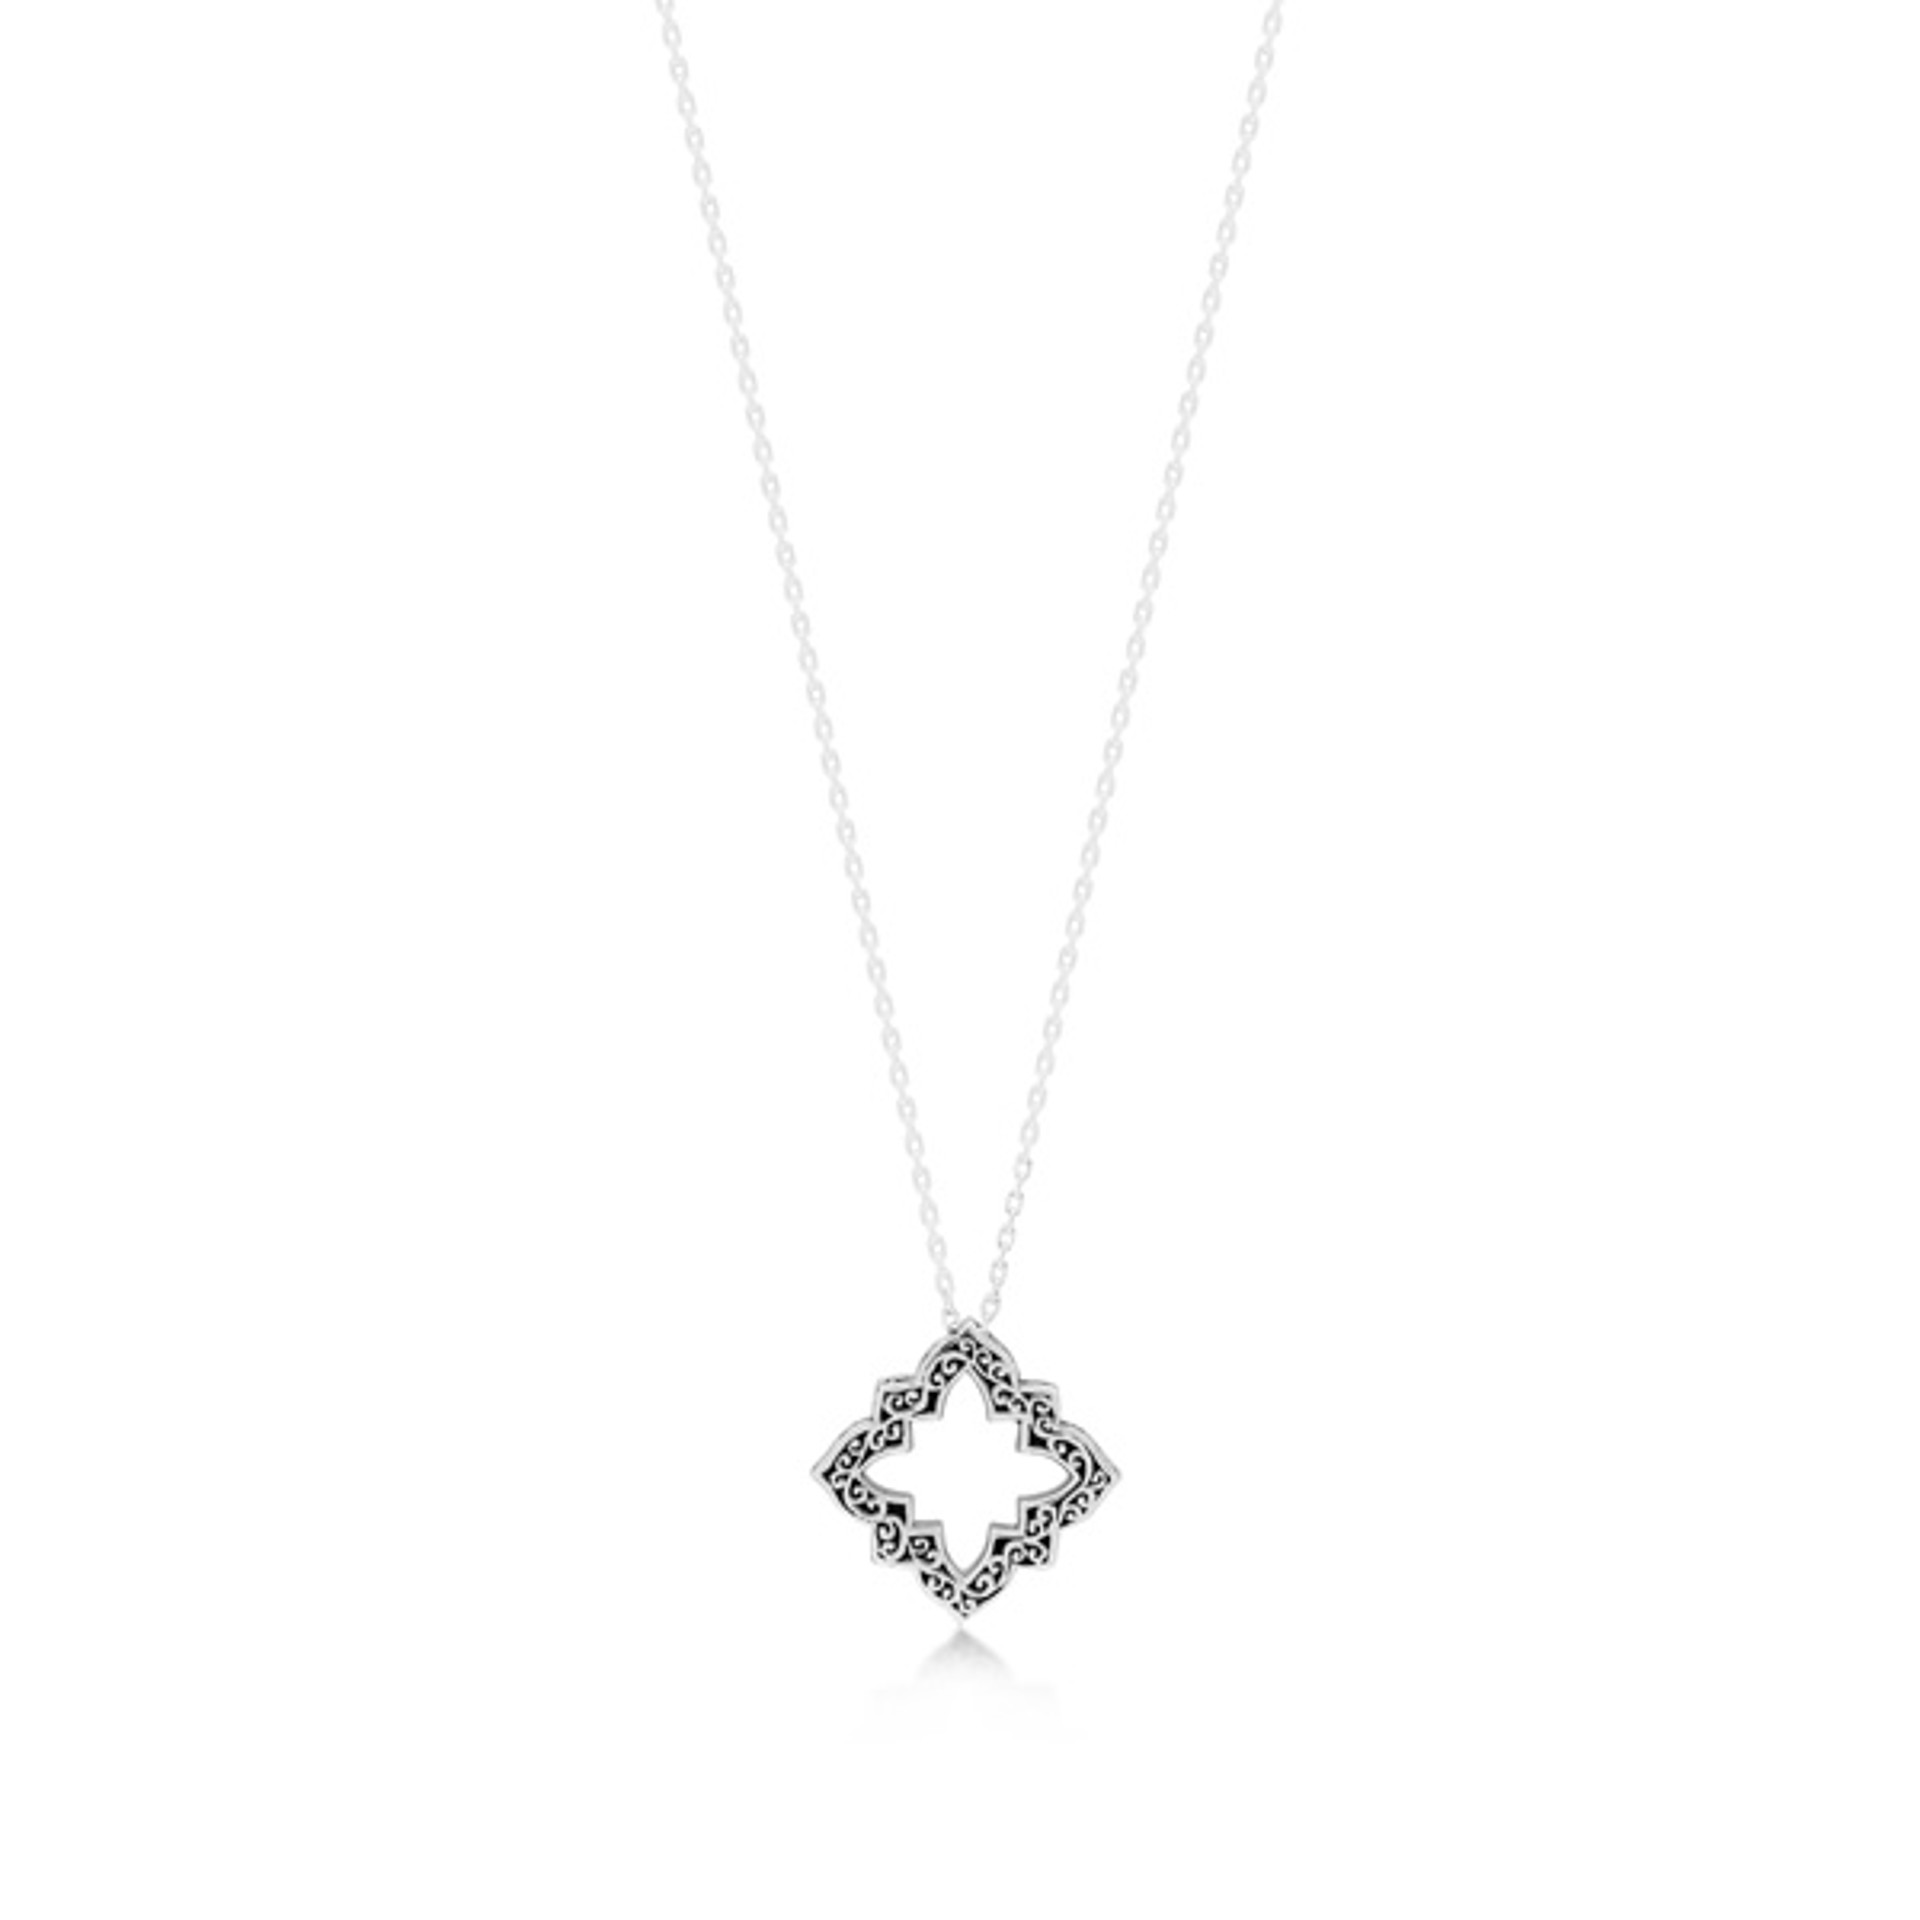 Stylized Diamond-Shaped Open Pendant Necklace by Lois Hill